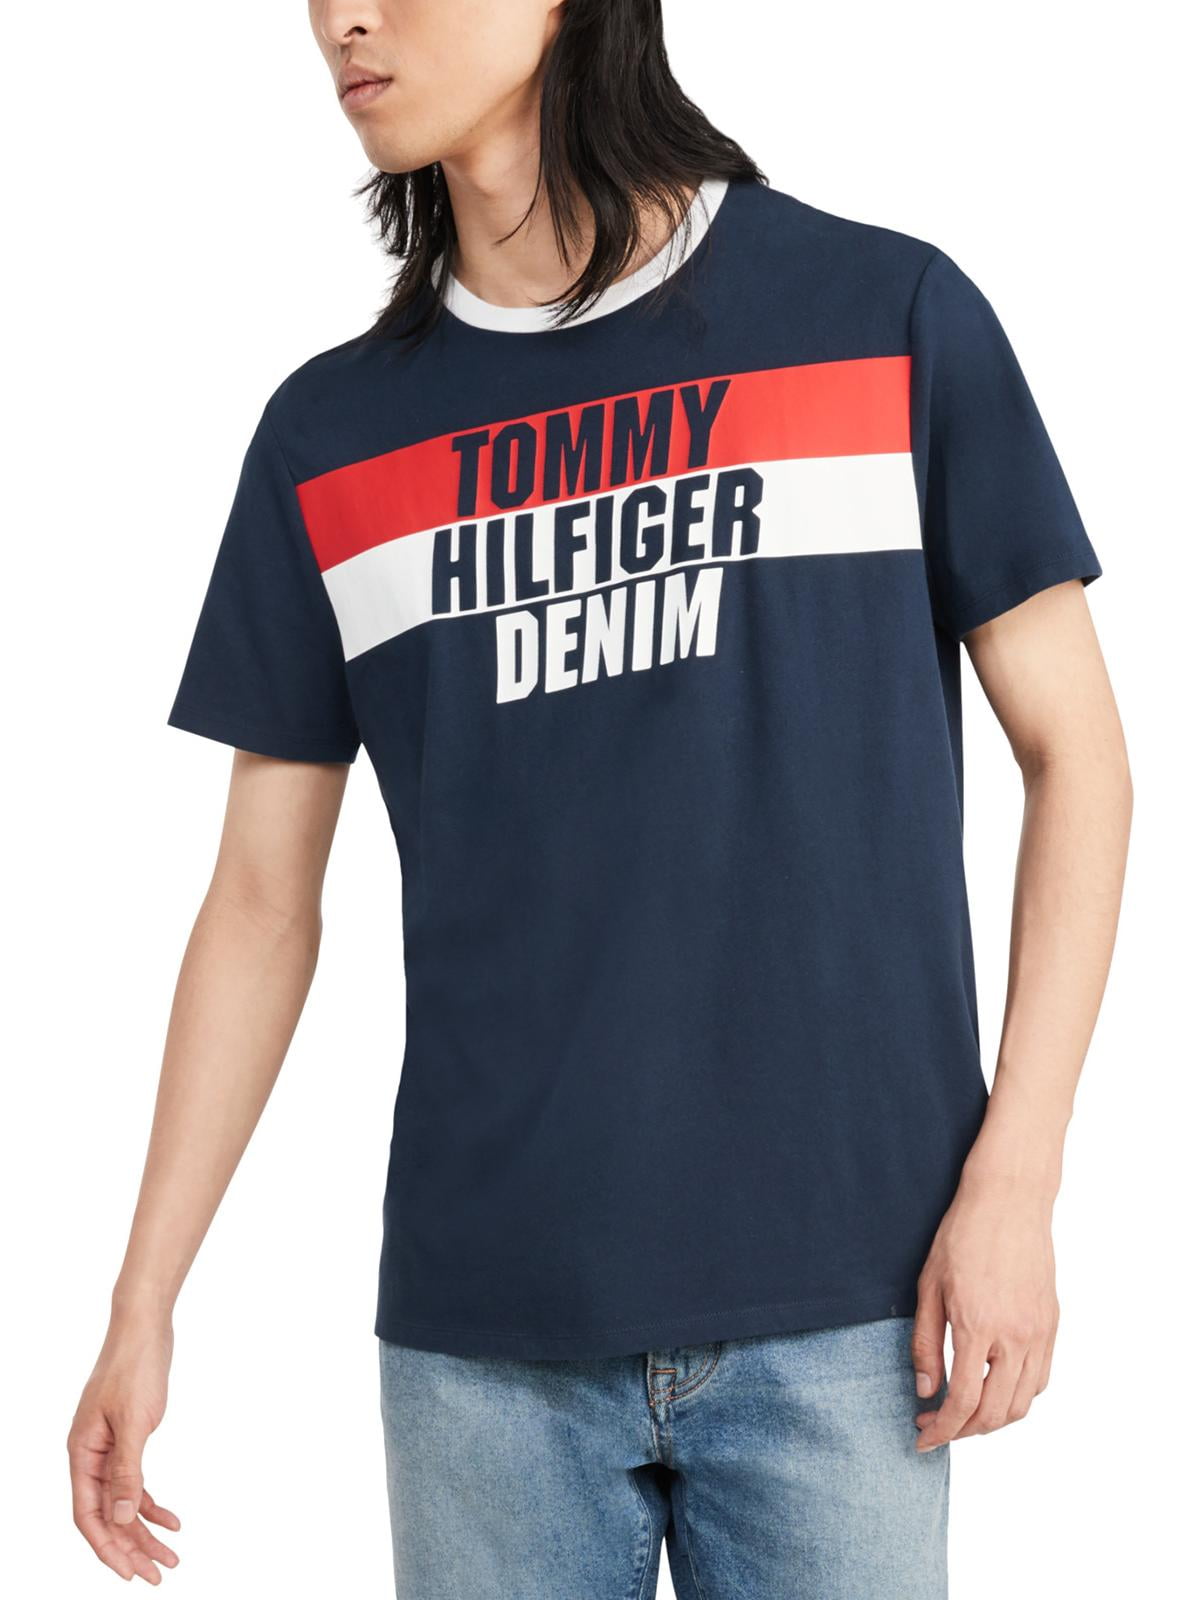 Tommy Hilfiger Denim Mens Crew Neck Graphic T-Shirt 